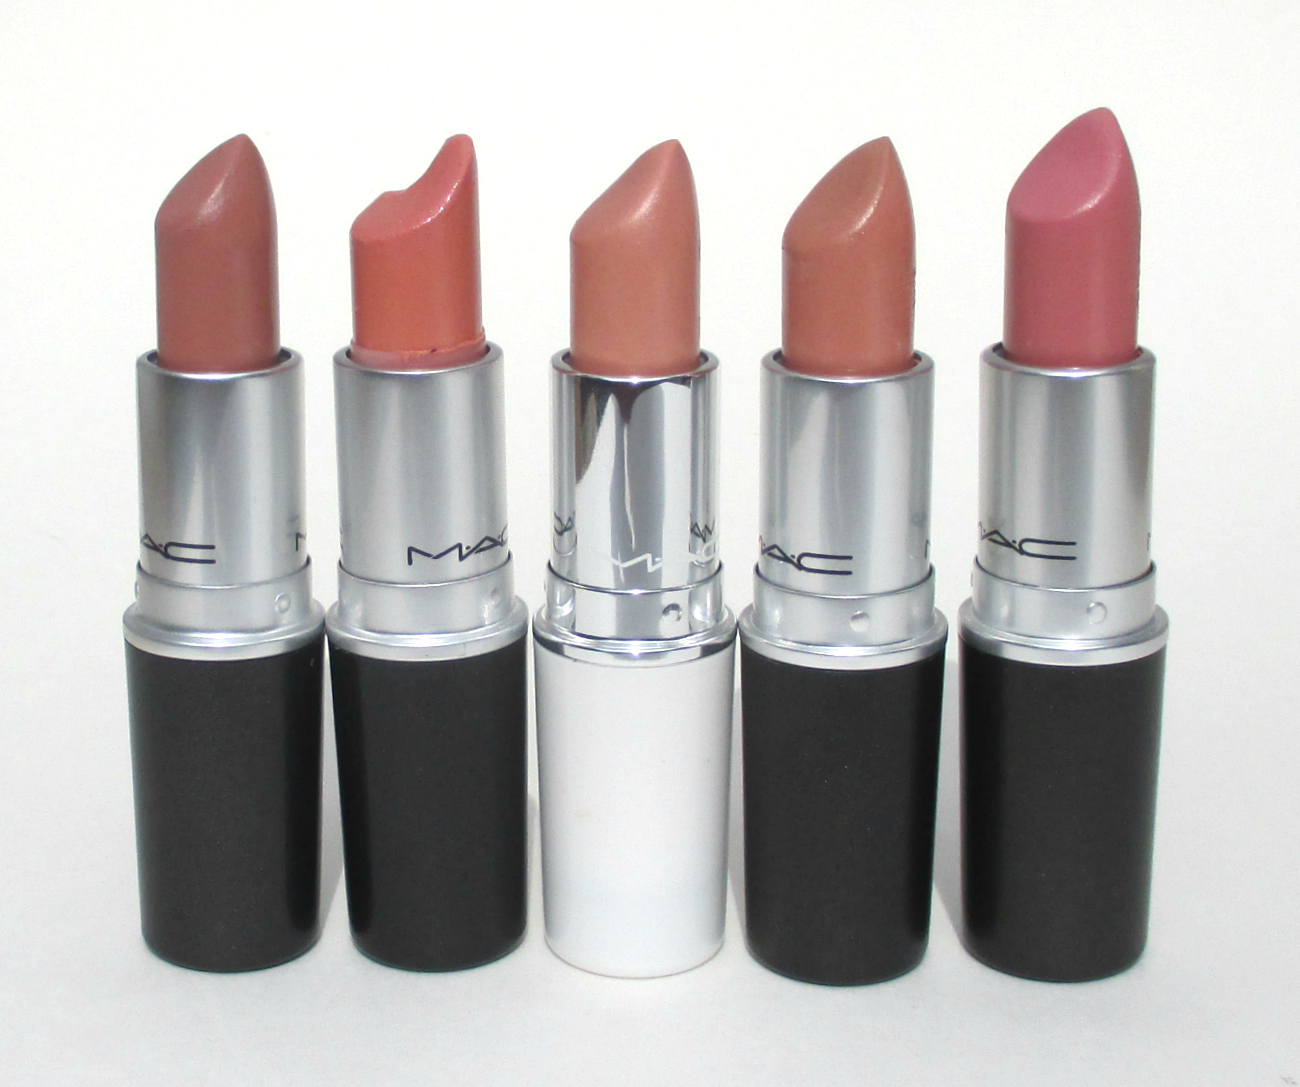 Mac nude lipsticks